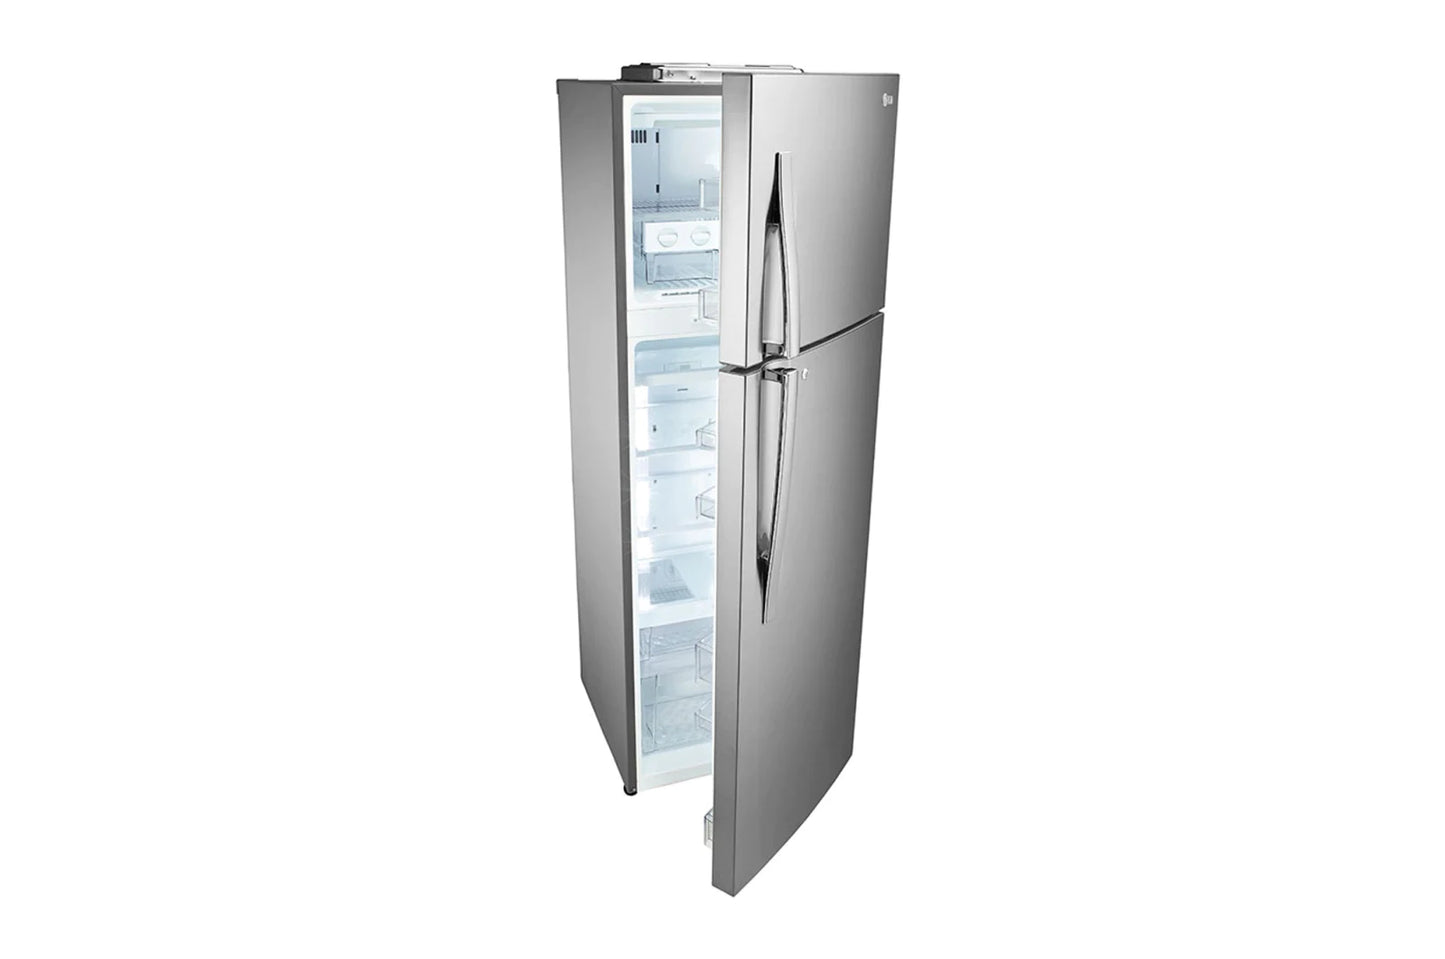 LG REF 322 RLBN 308L Top Freezer Inverter Refrigerator